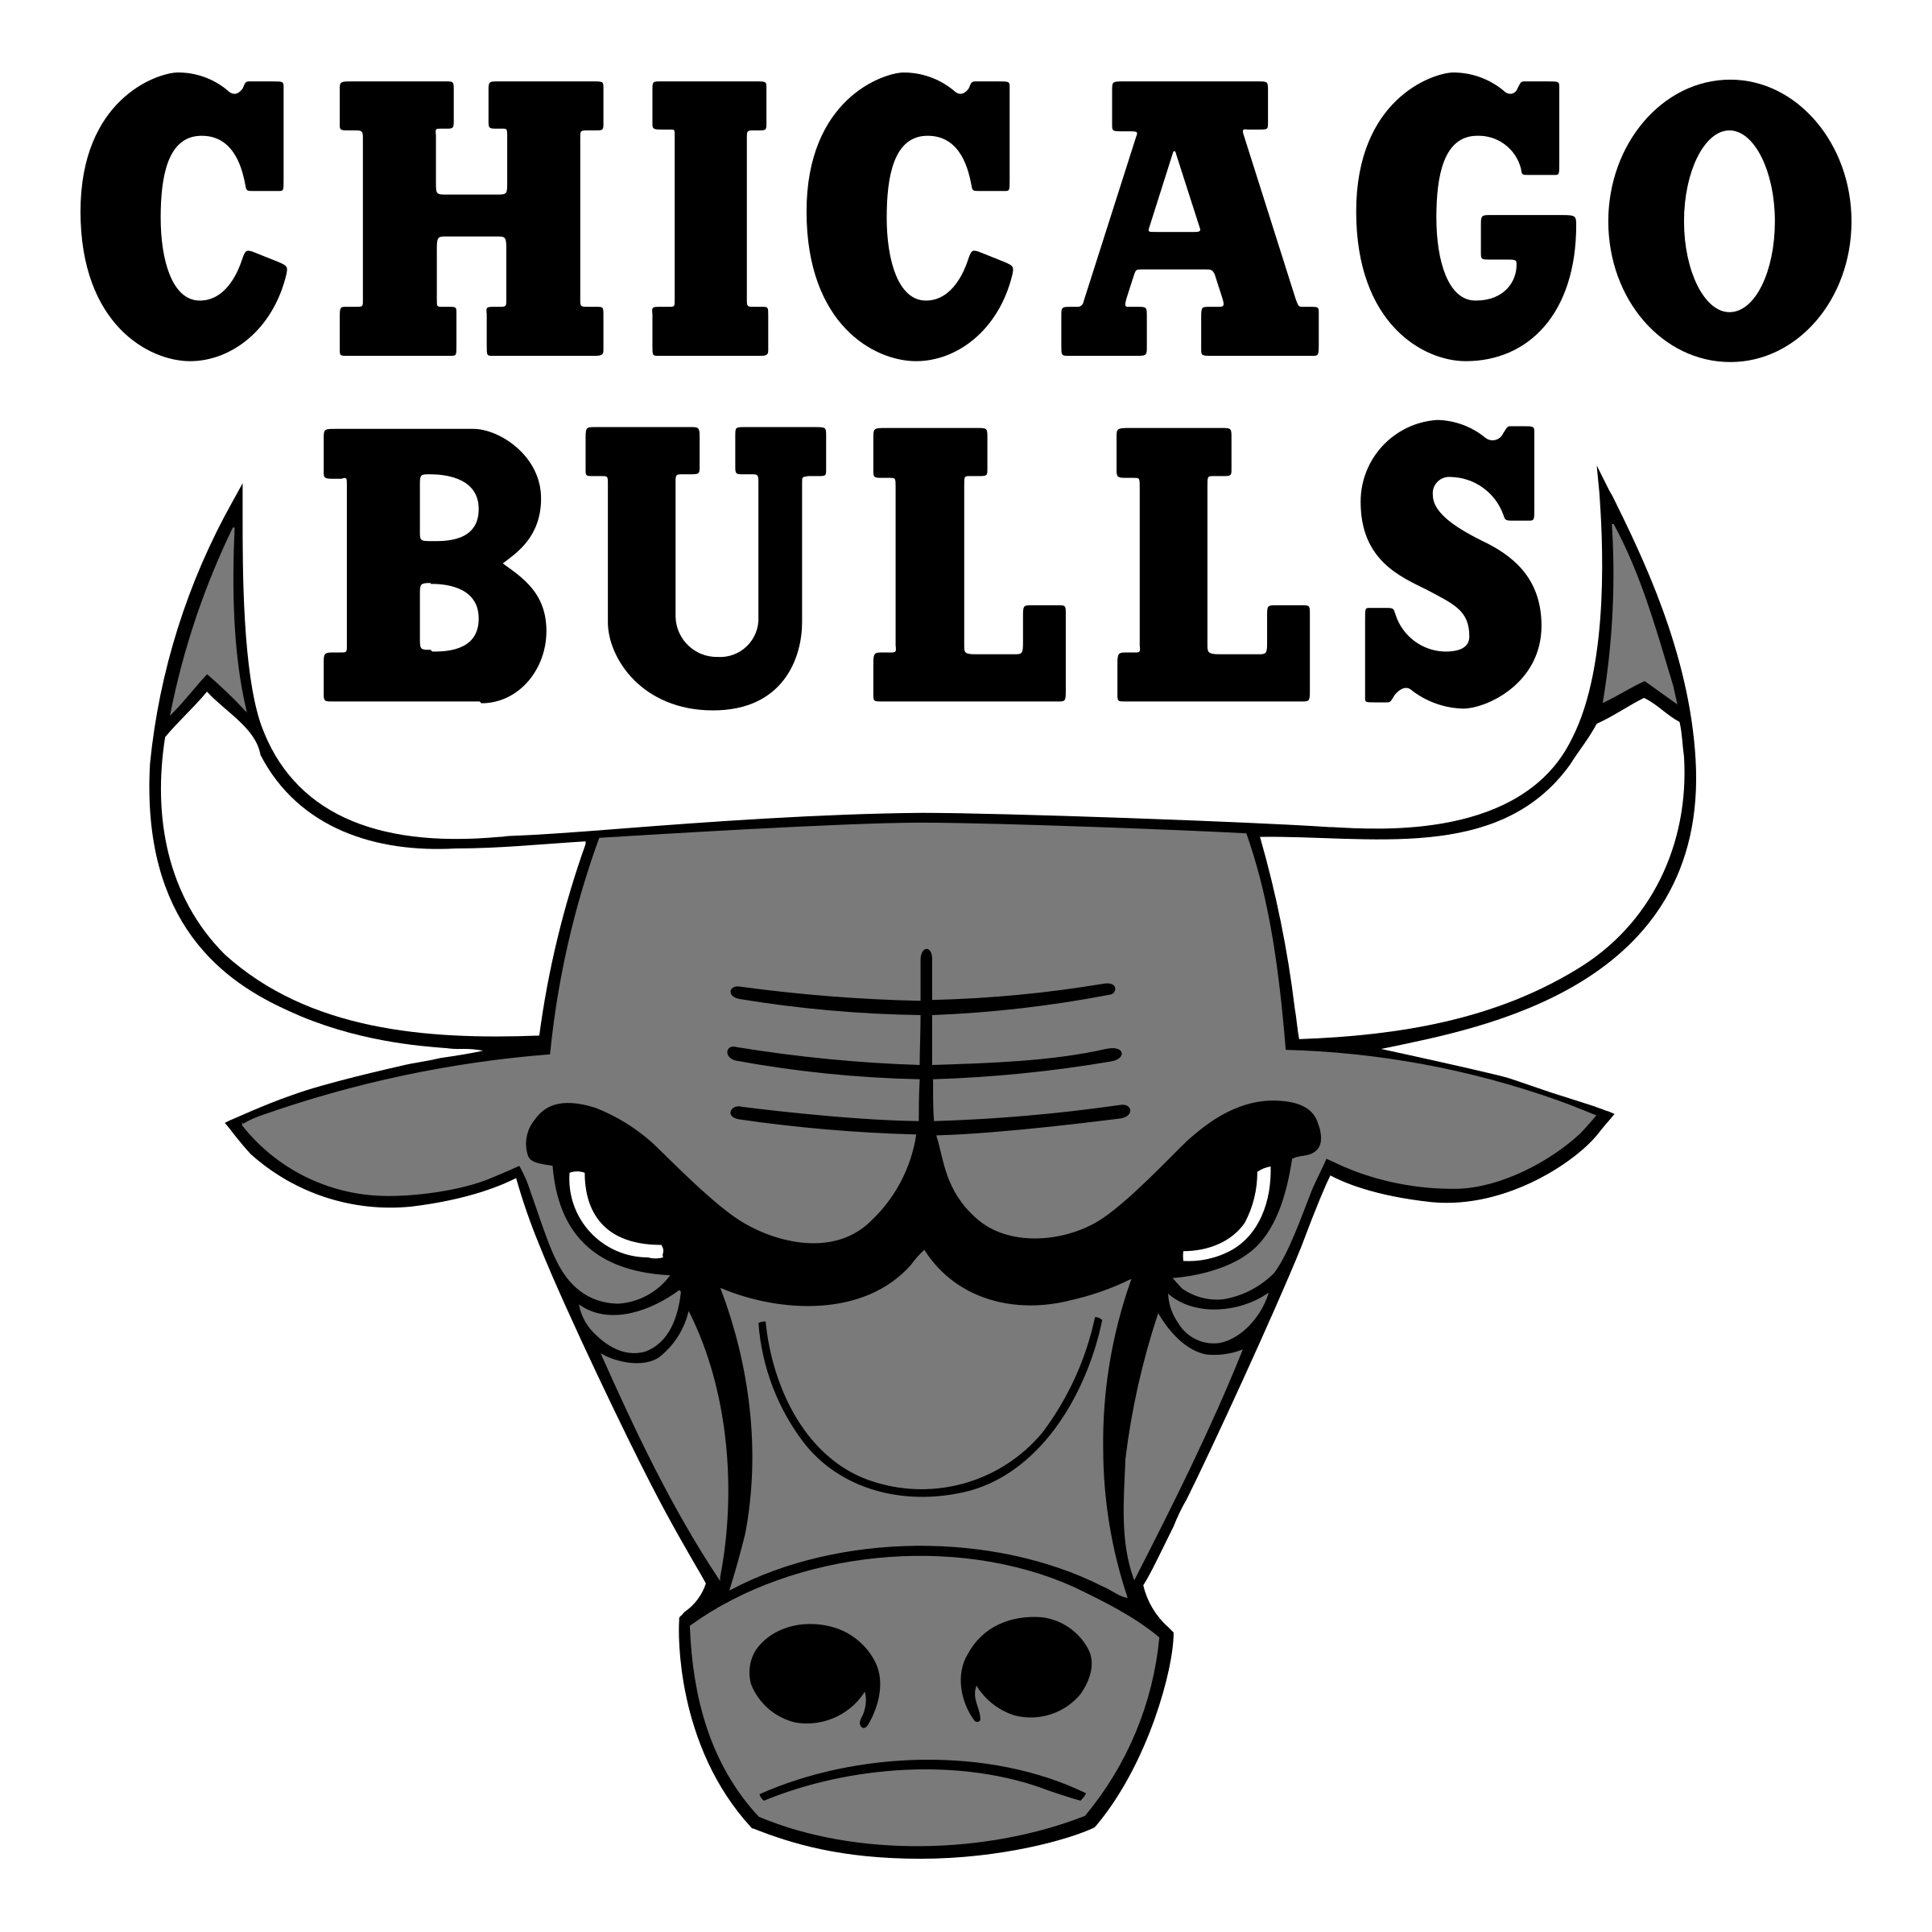 All-Black Bulls Logo - Chicago Bulls Logo PNG Transparent & SVG Vector - Freebie Supply